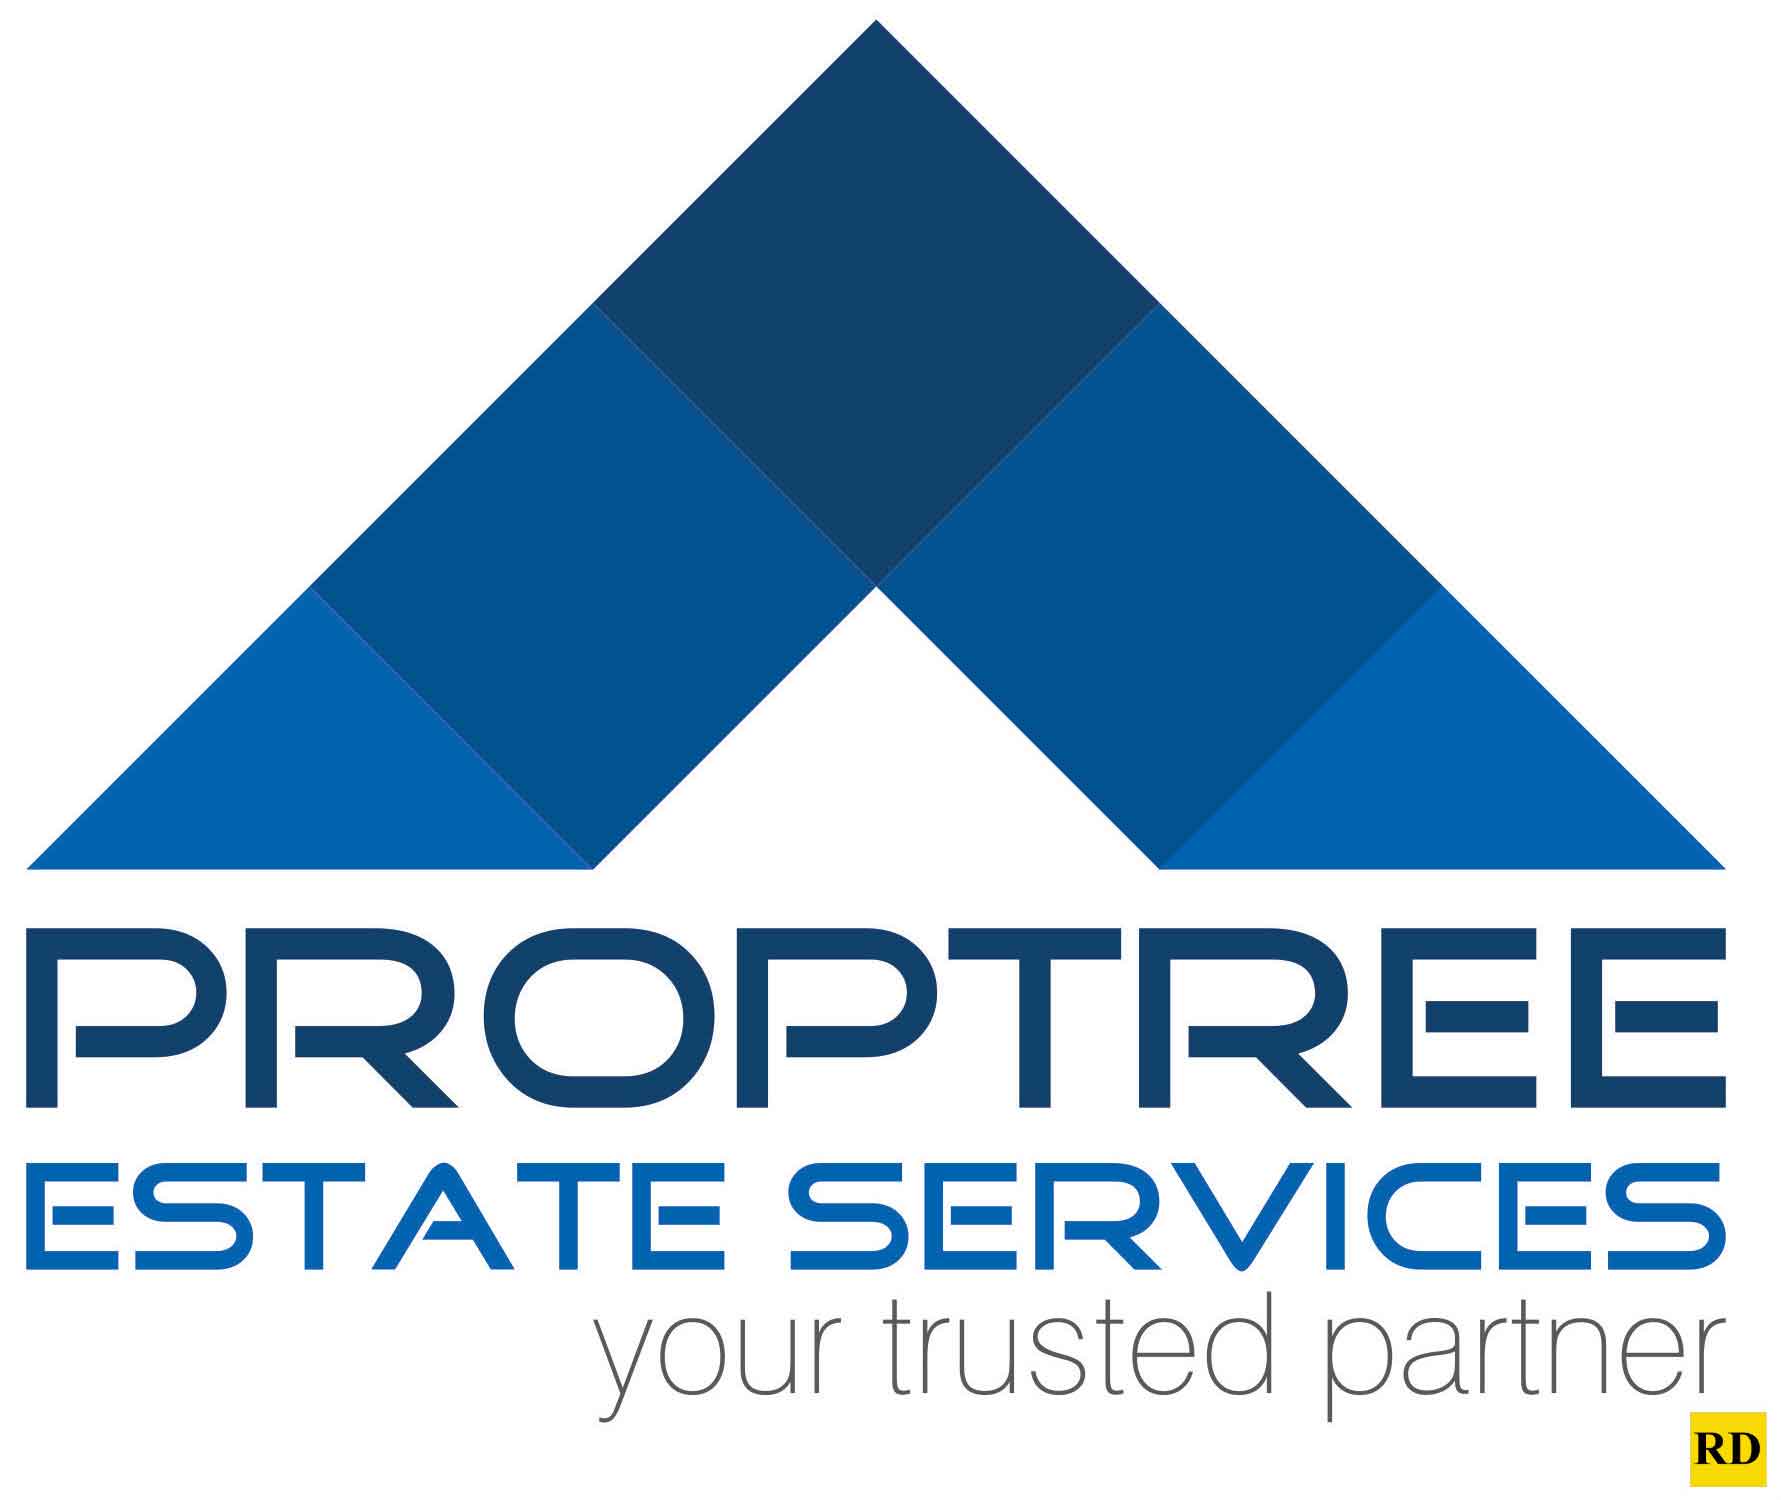 Proptree Estate Services